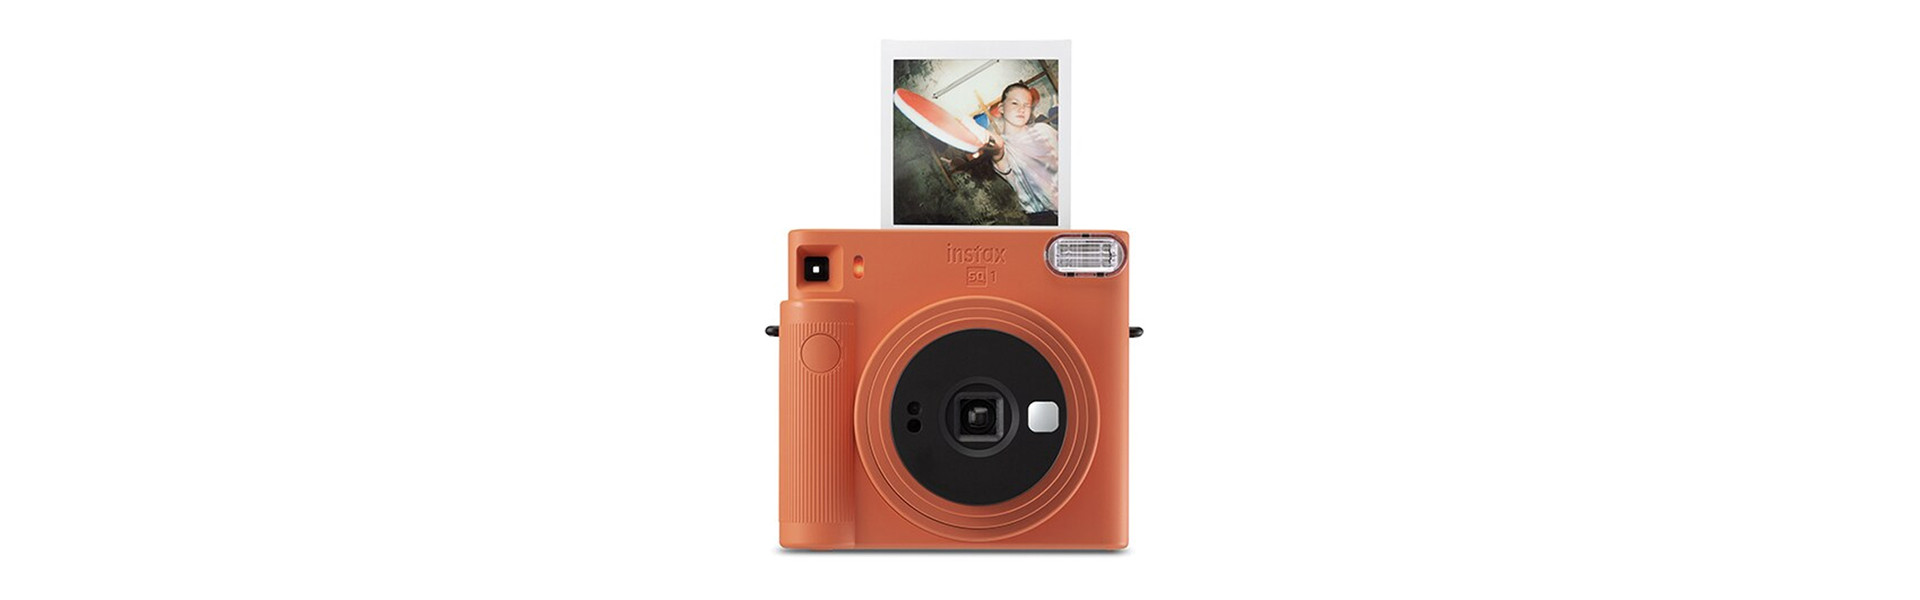 FUJIFILM instax® SQUARE SQ1 Instant Camera, $160.49 at The Source